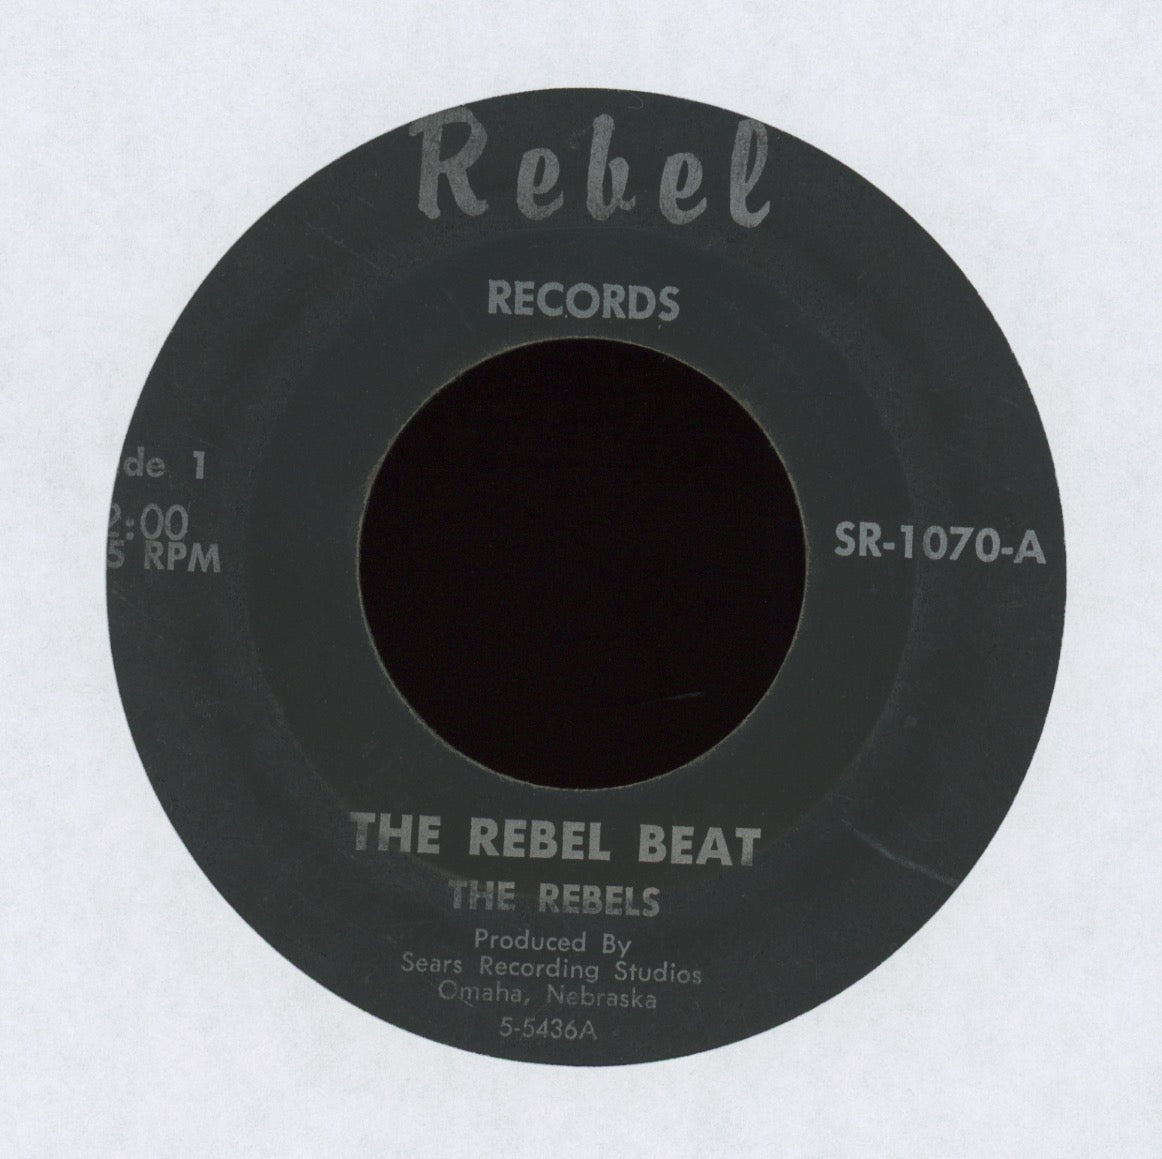 The Rebels (Three) - The Rebel Beat on Rebel